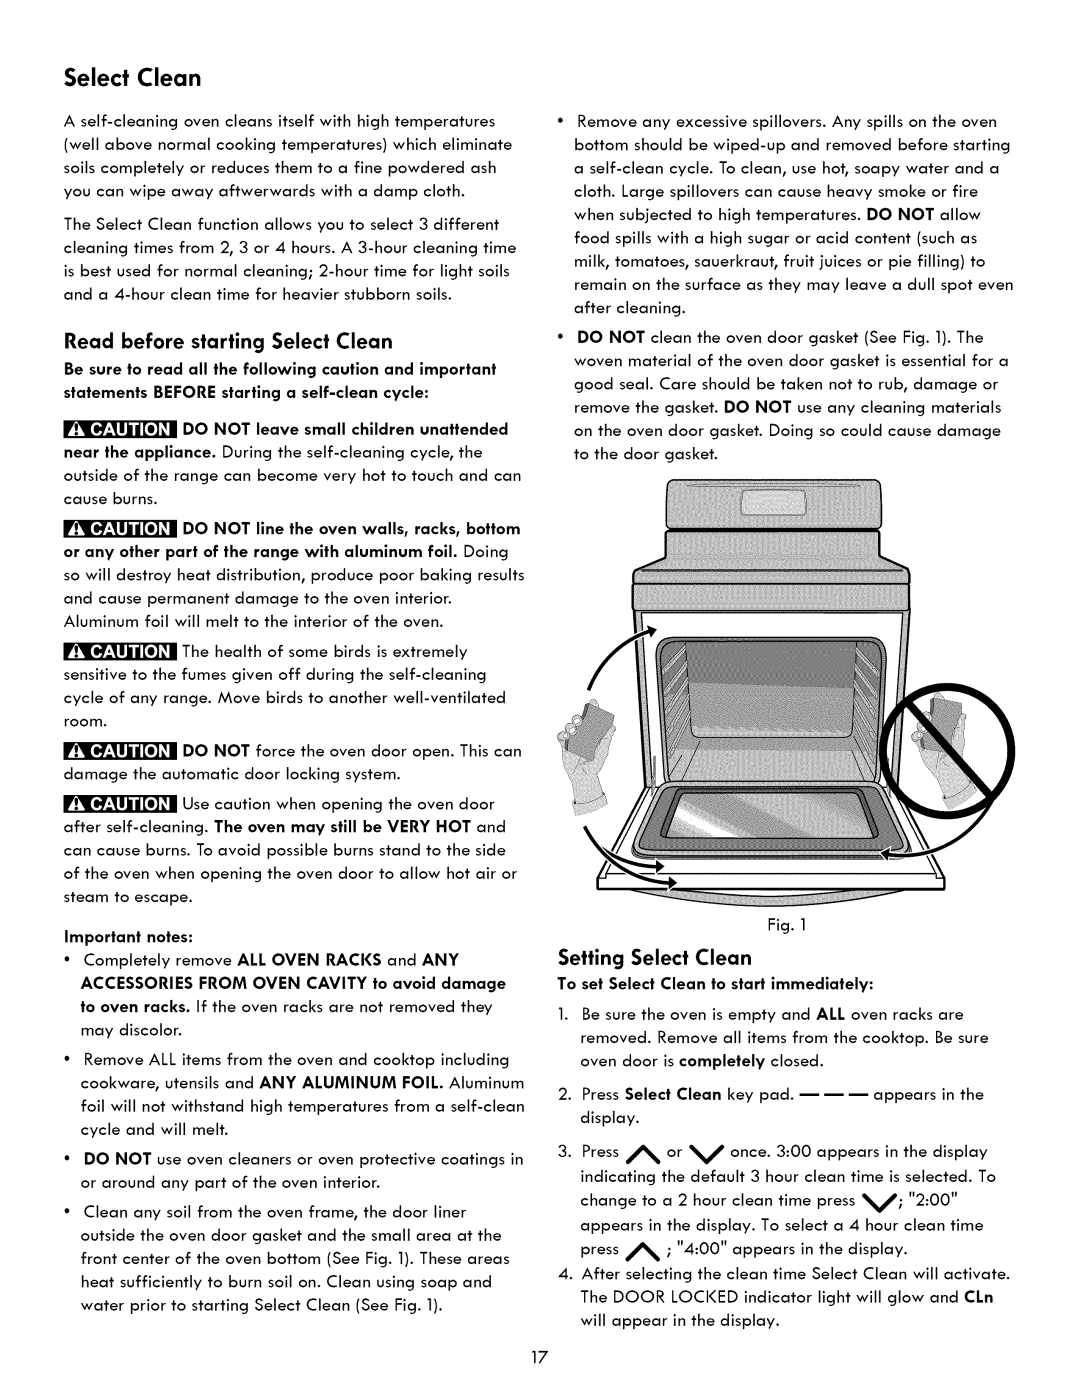 Kenmore 790. 7260 manual Read before starting Select Clean, Setting Select Clean 